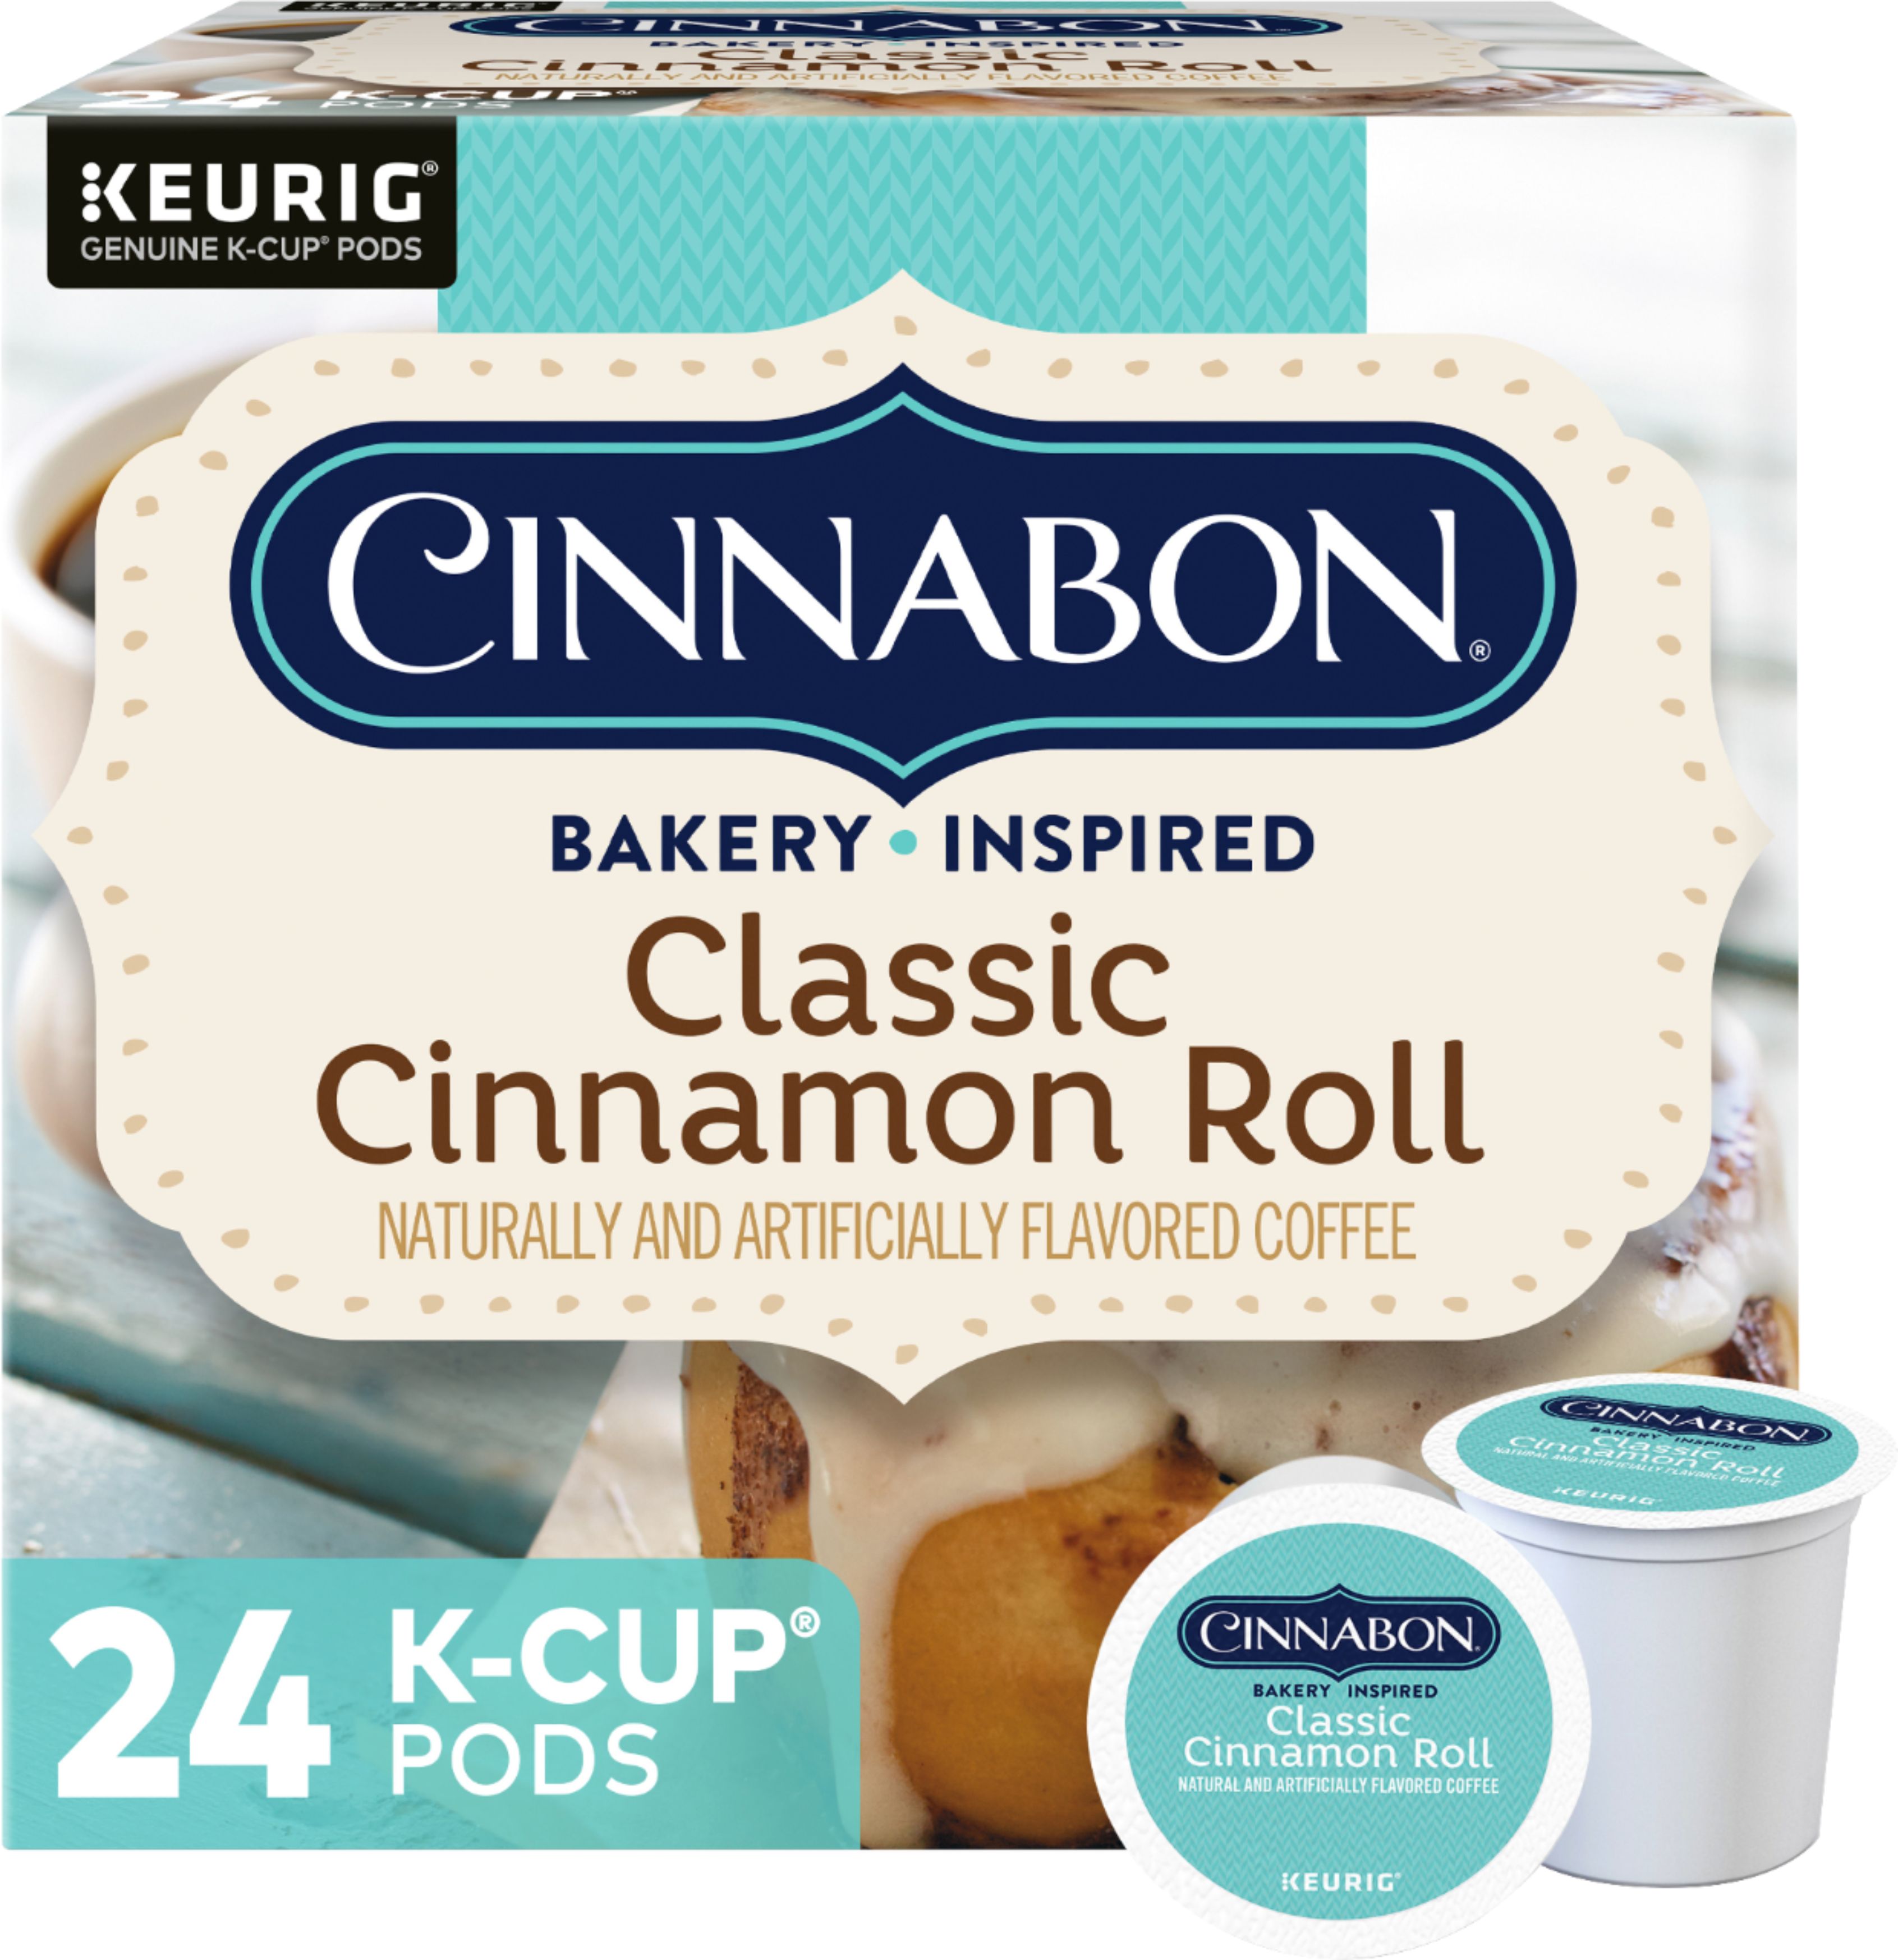 Cinnabon Classic Cinnamon Roll Keurig Single-Serve K-Cup Pods, Light Roast Coffee, 24 Count